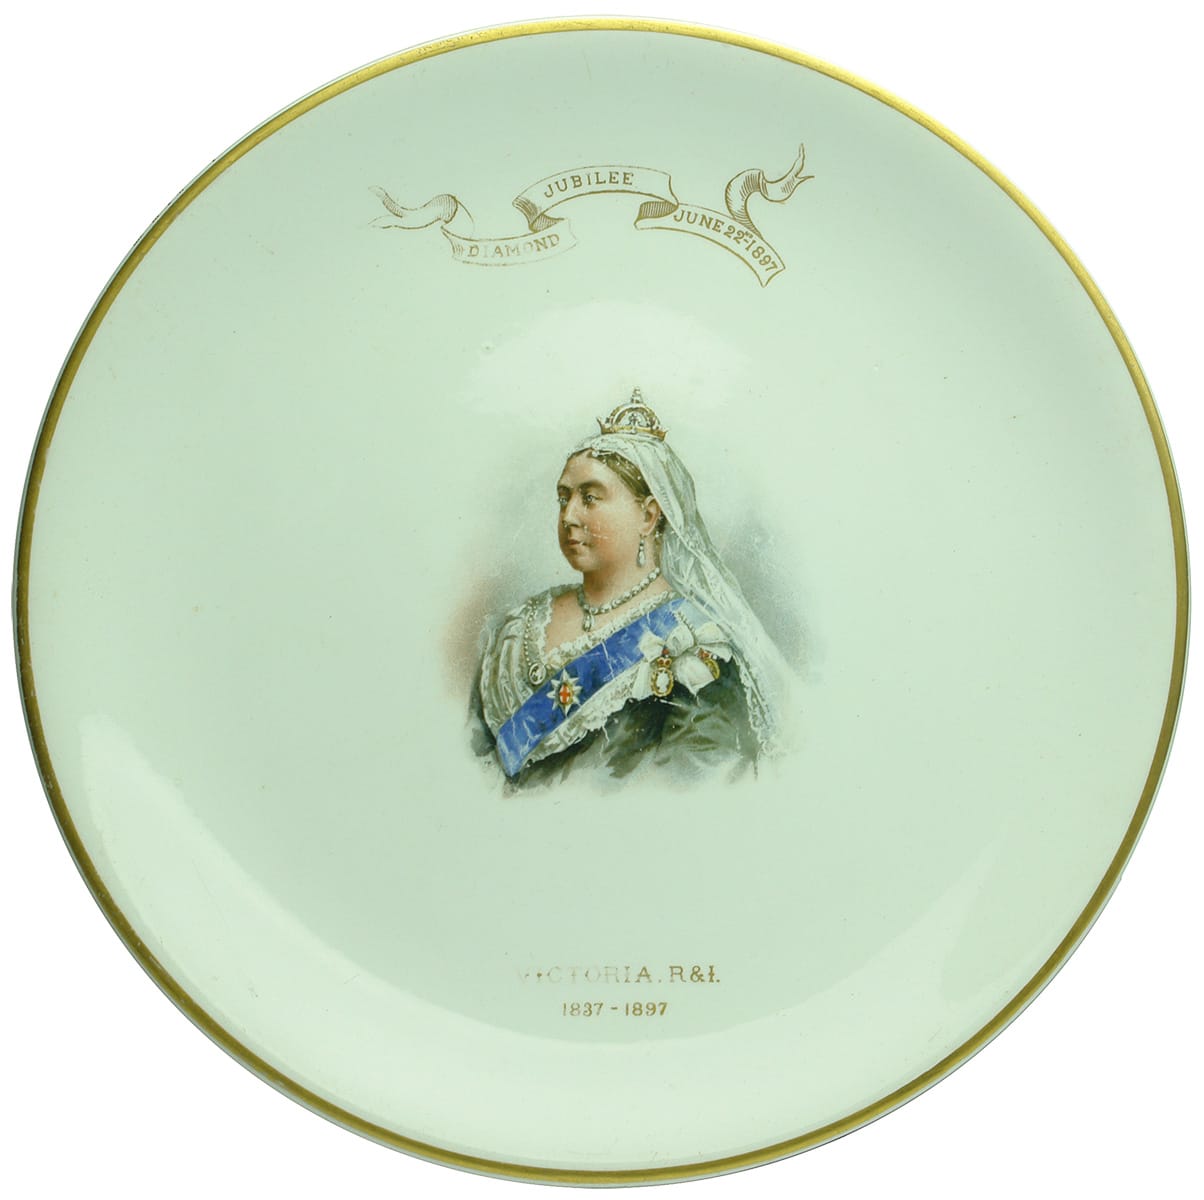 Queen Victoria Diamond Jubilee 1897 Plate